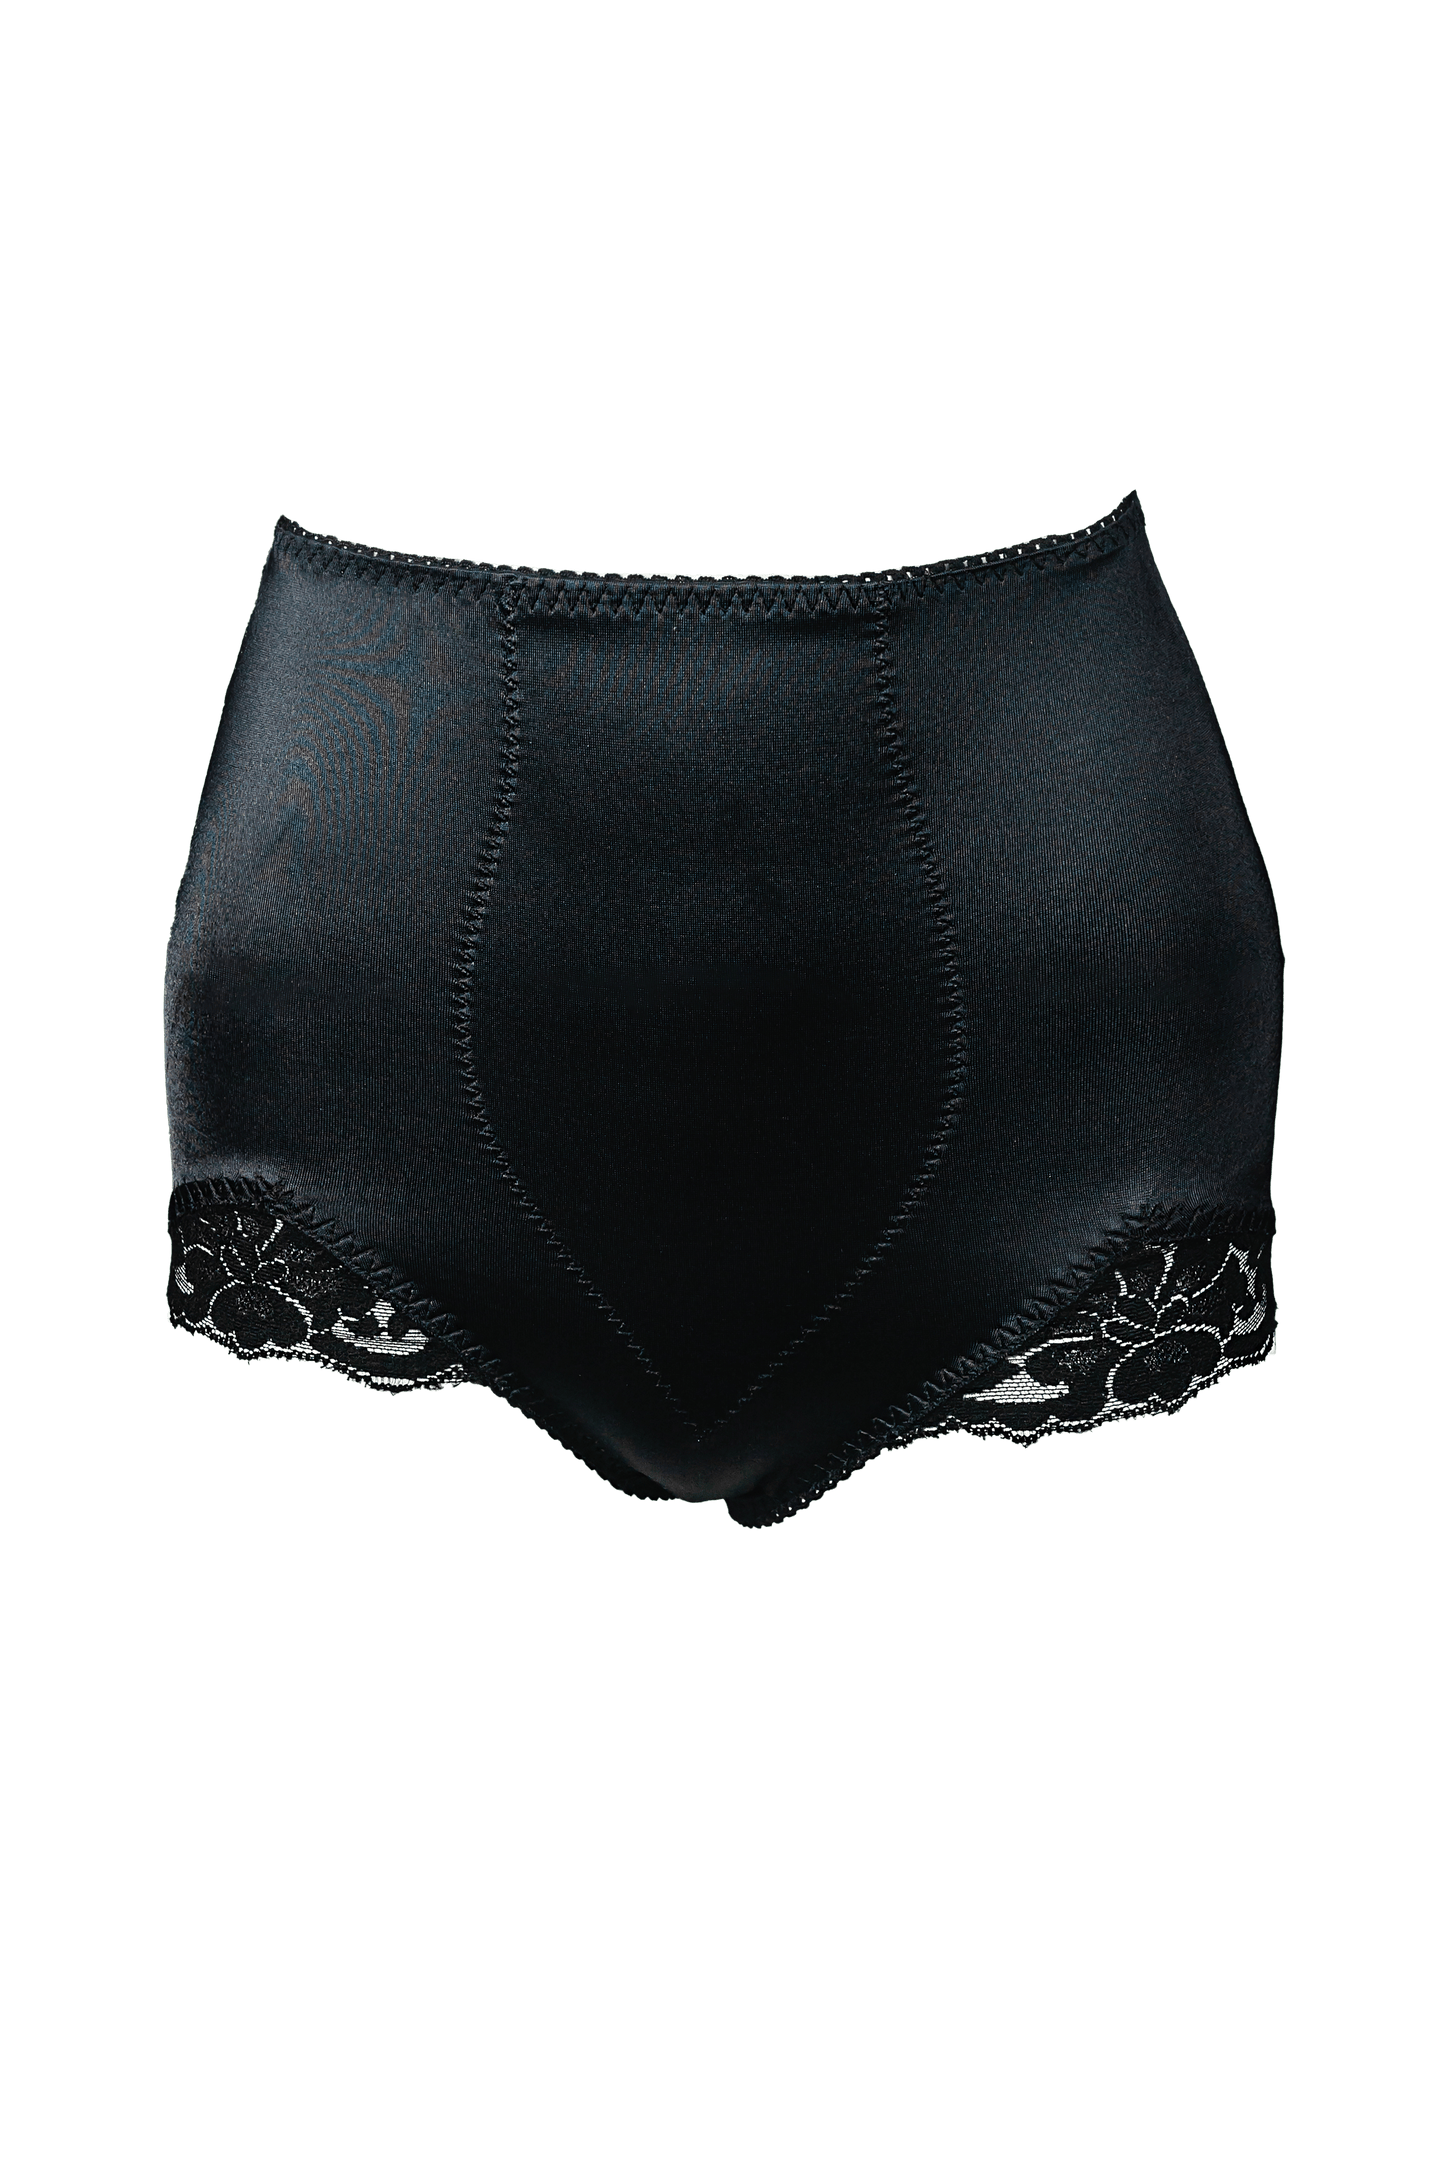 Rago 919 Light Support Slimming/Smoothing Panty Brief – Rago Shapewear